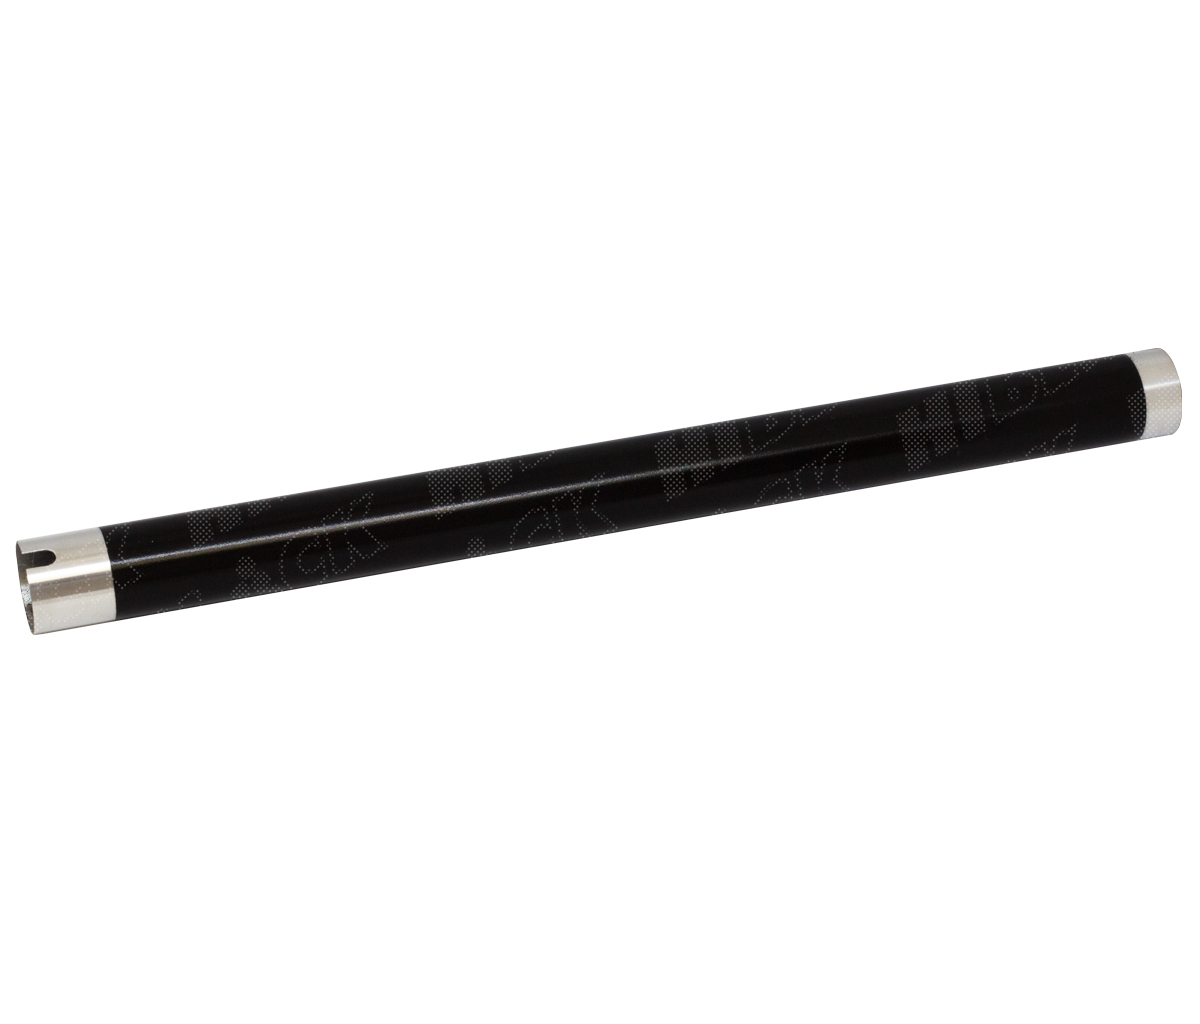 Вал тефлоновый верхний Hi-Black для Kyocera FS-1010/1020/1016MFP/1040/1030D KM-1500